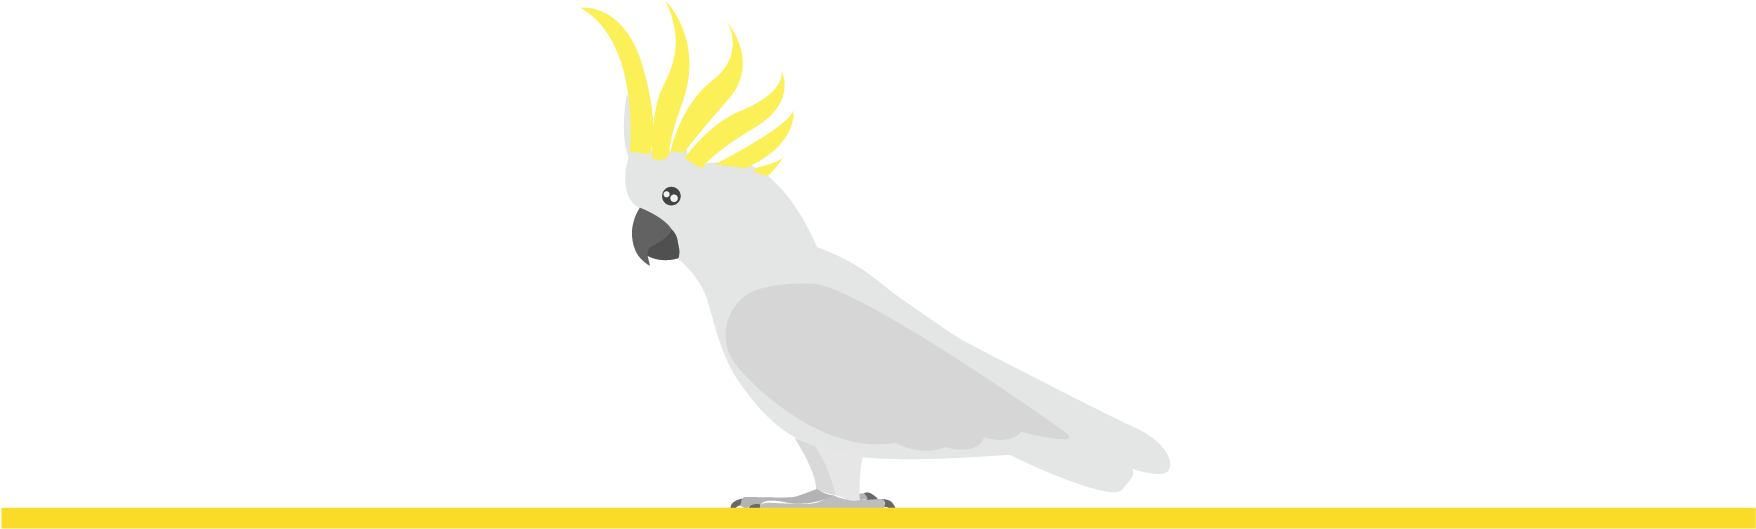 Yellow Crested Cockatoo Illustration